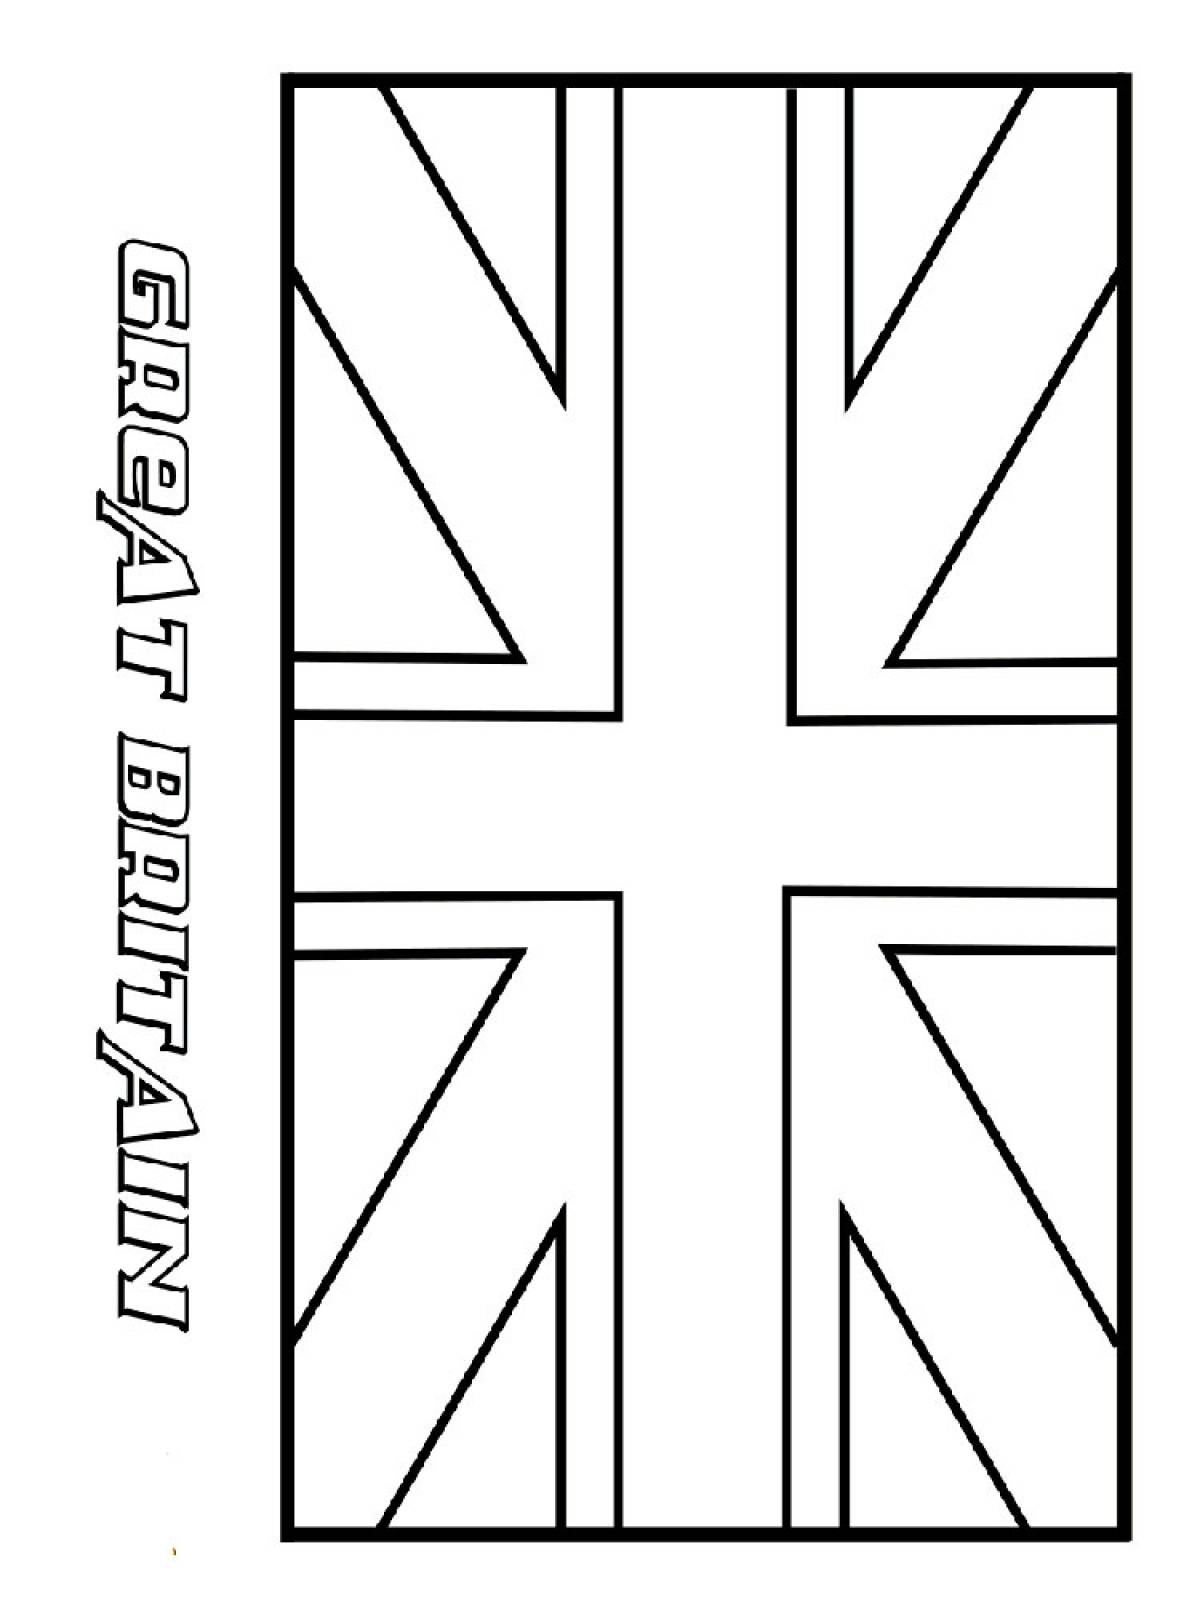 Трафарет британского флага